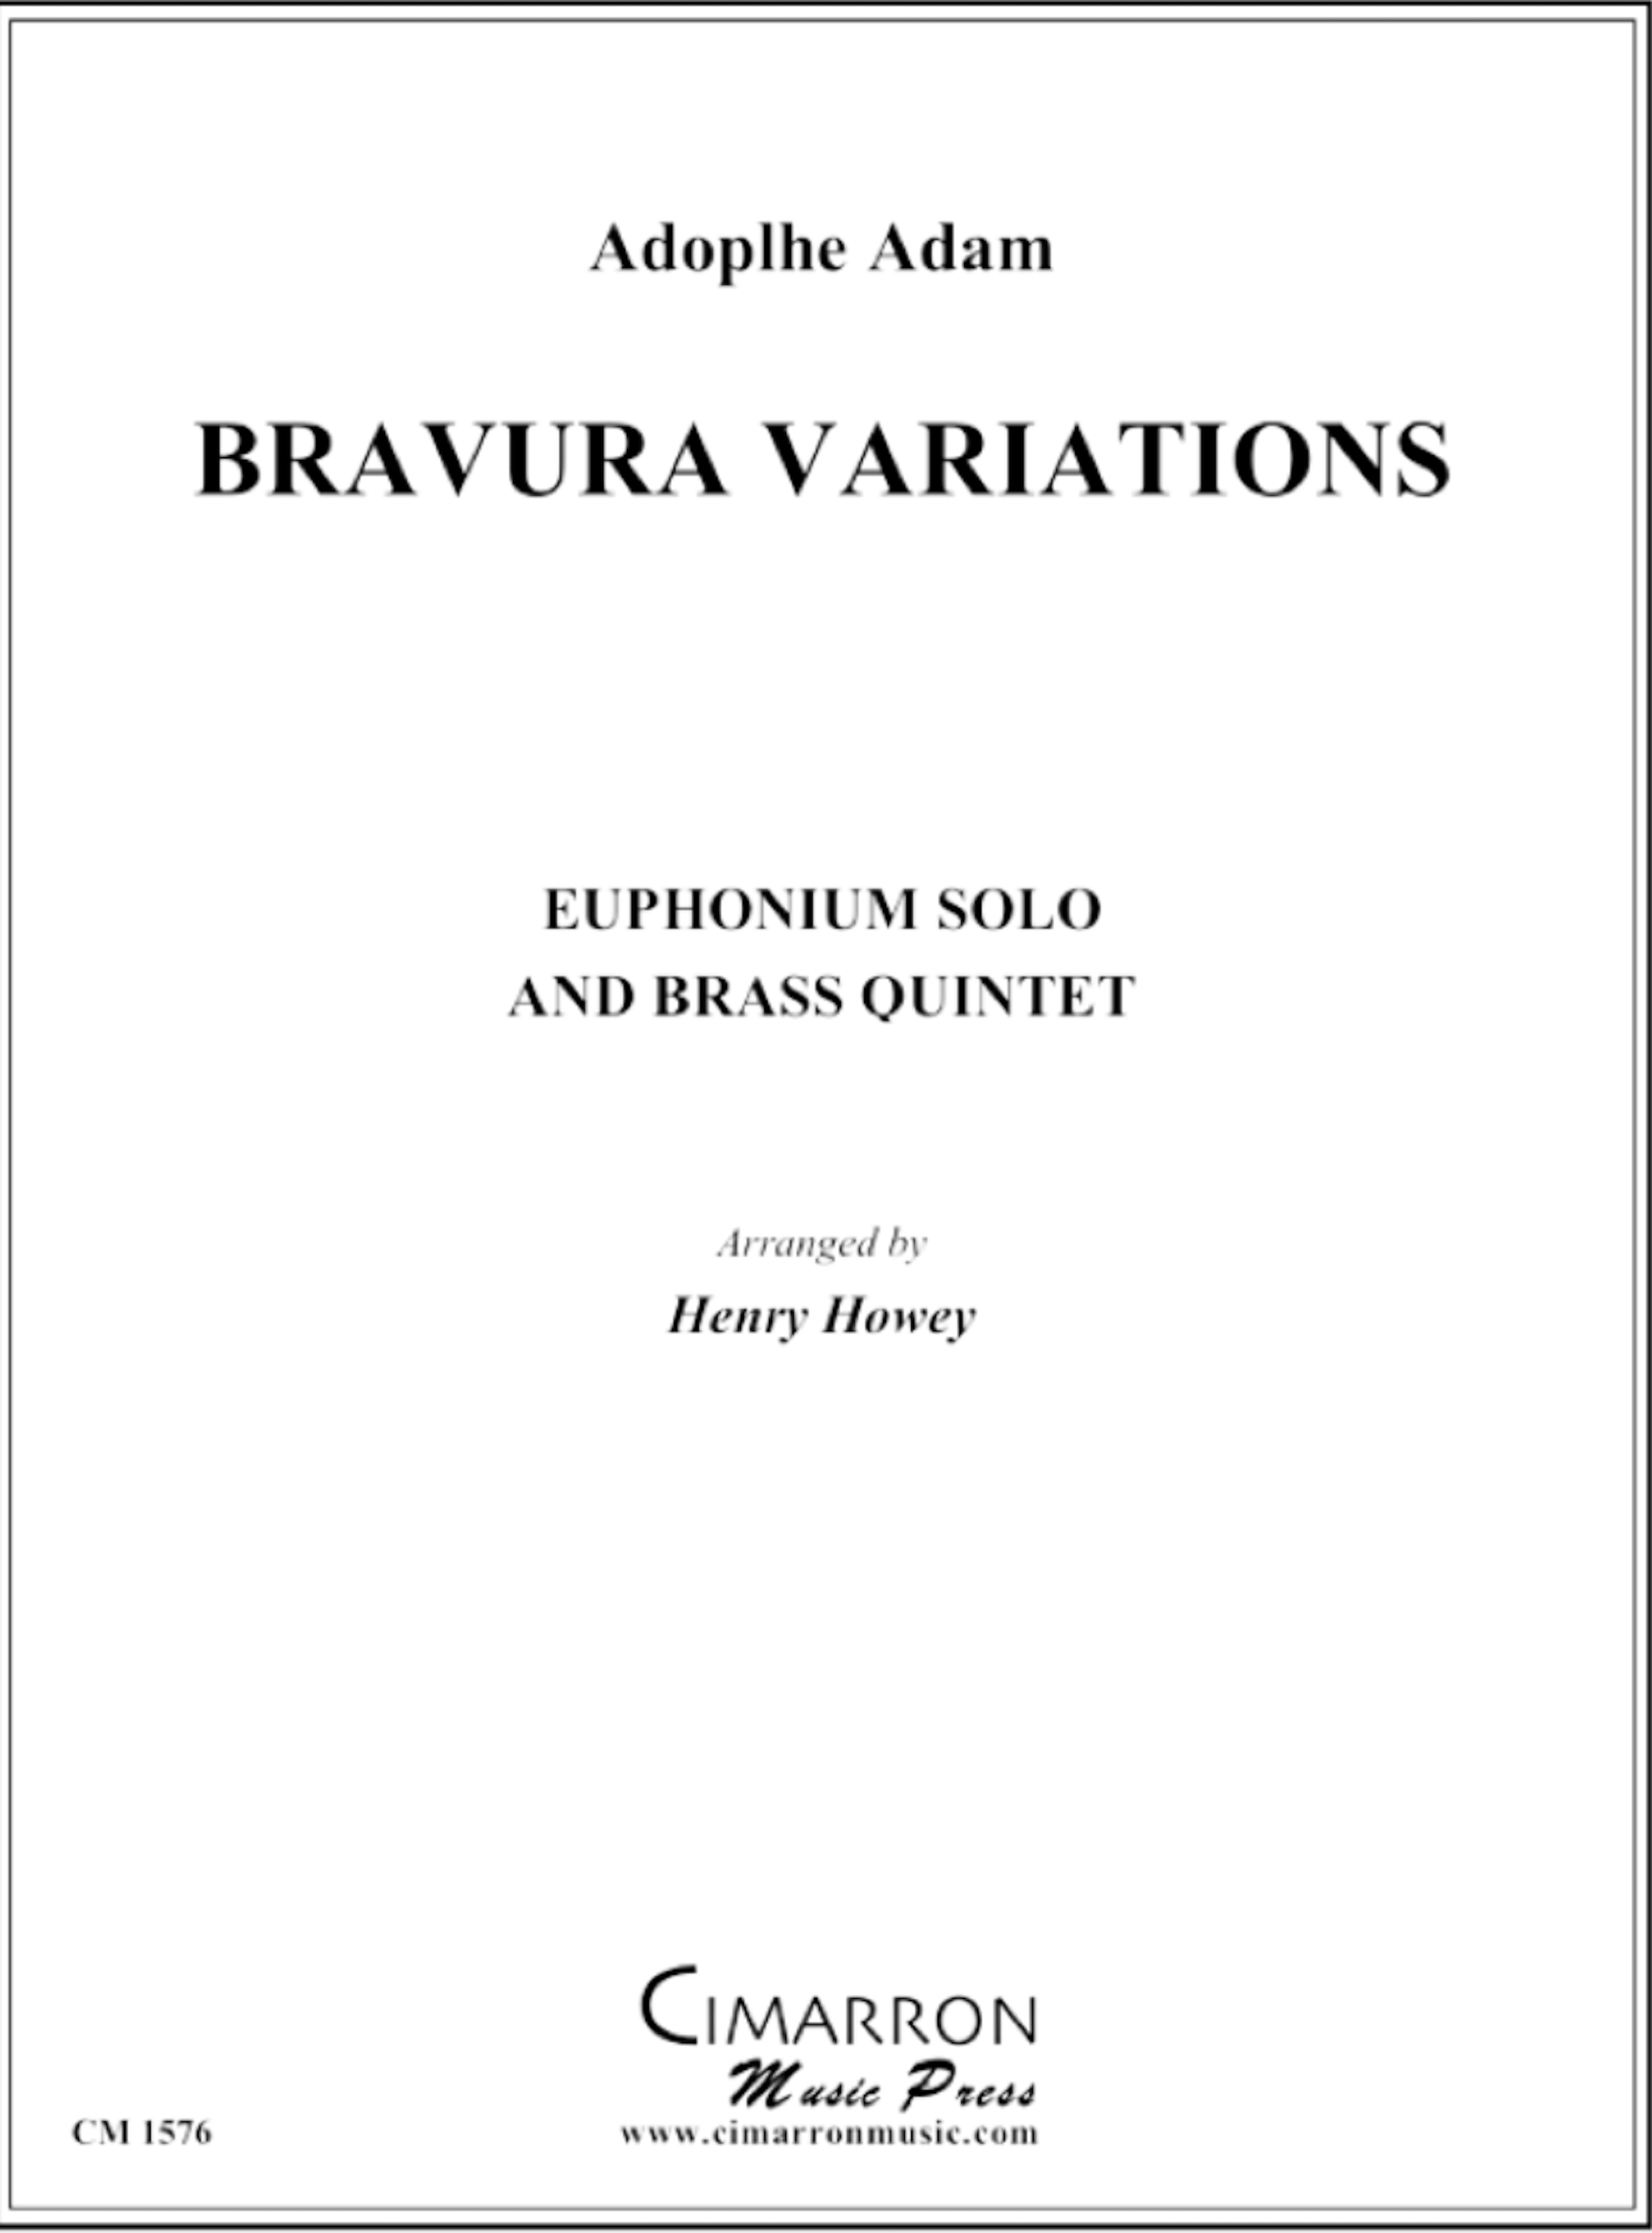 Bravura Variations - Adolphe Adam Arr. Henry Howey - Euphonium Solo and Brass Quintet